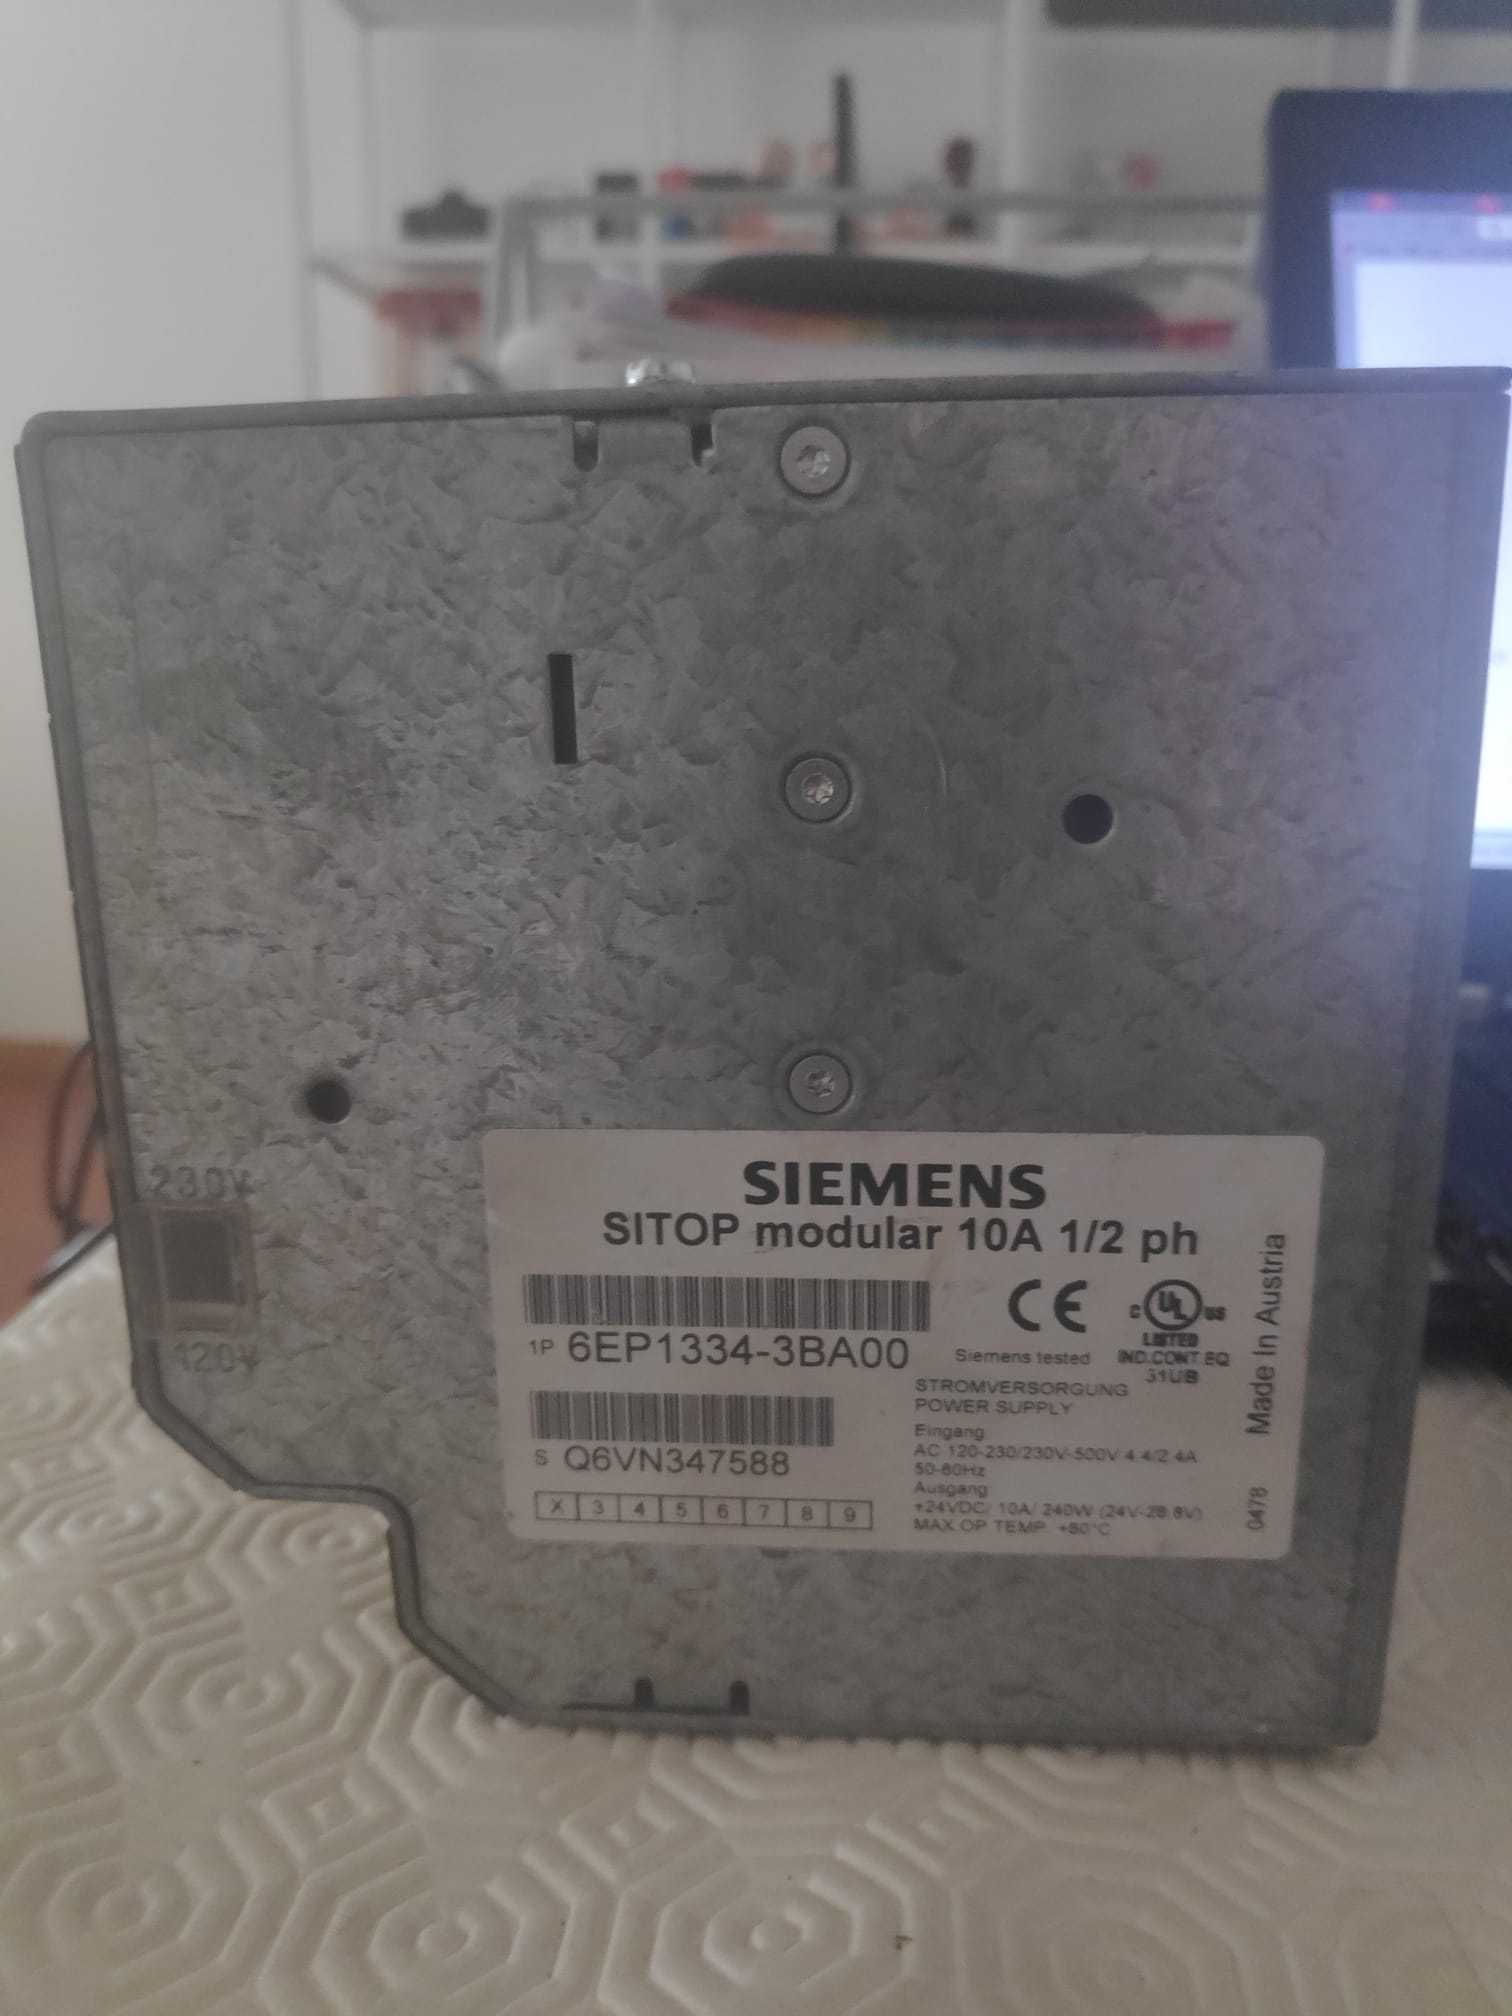 Siemens SITOP Modular 10A 1/2 Ph 6EP1334-3BA00 Power Supply